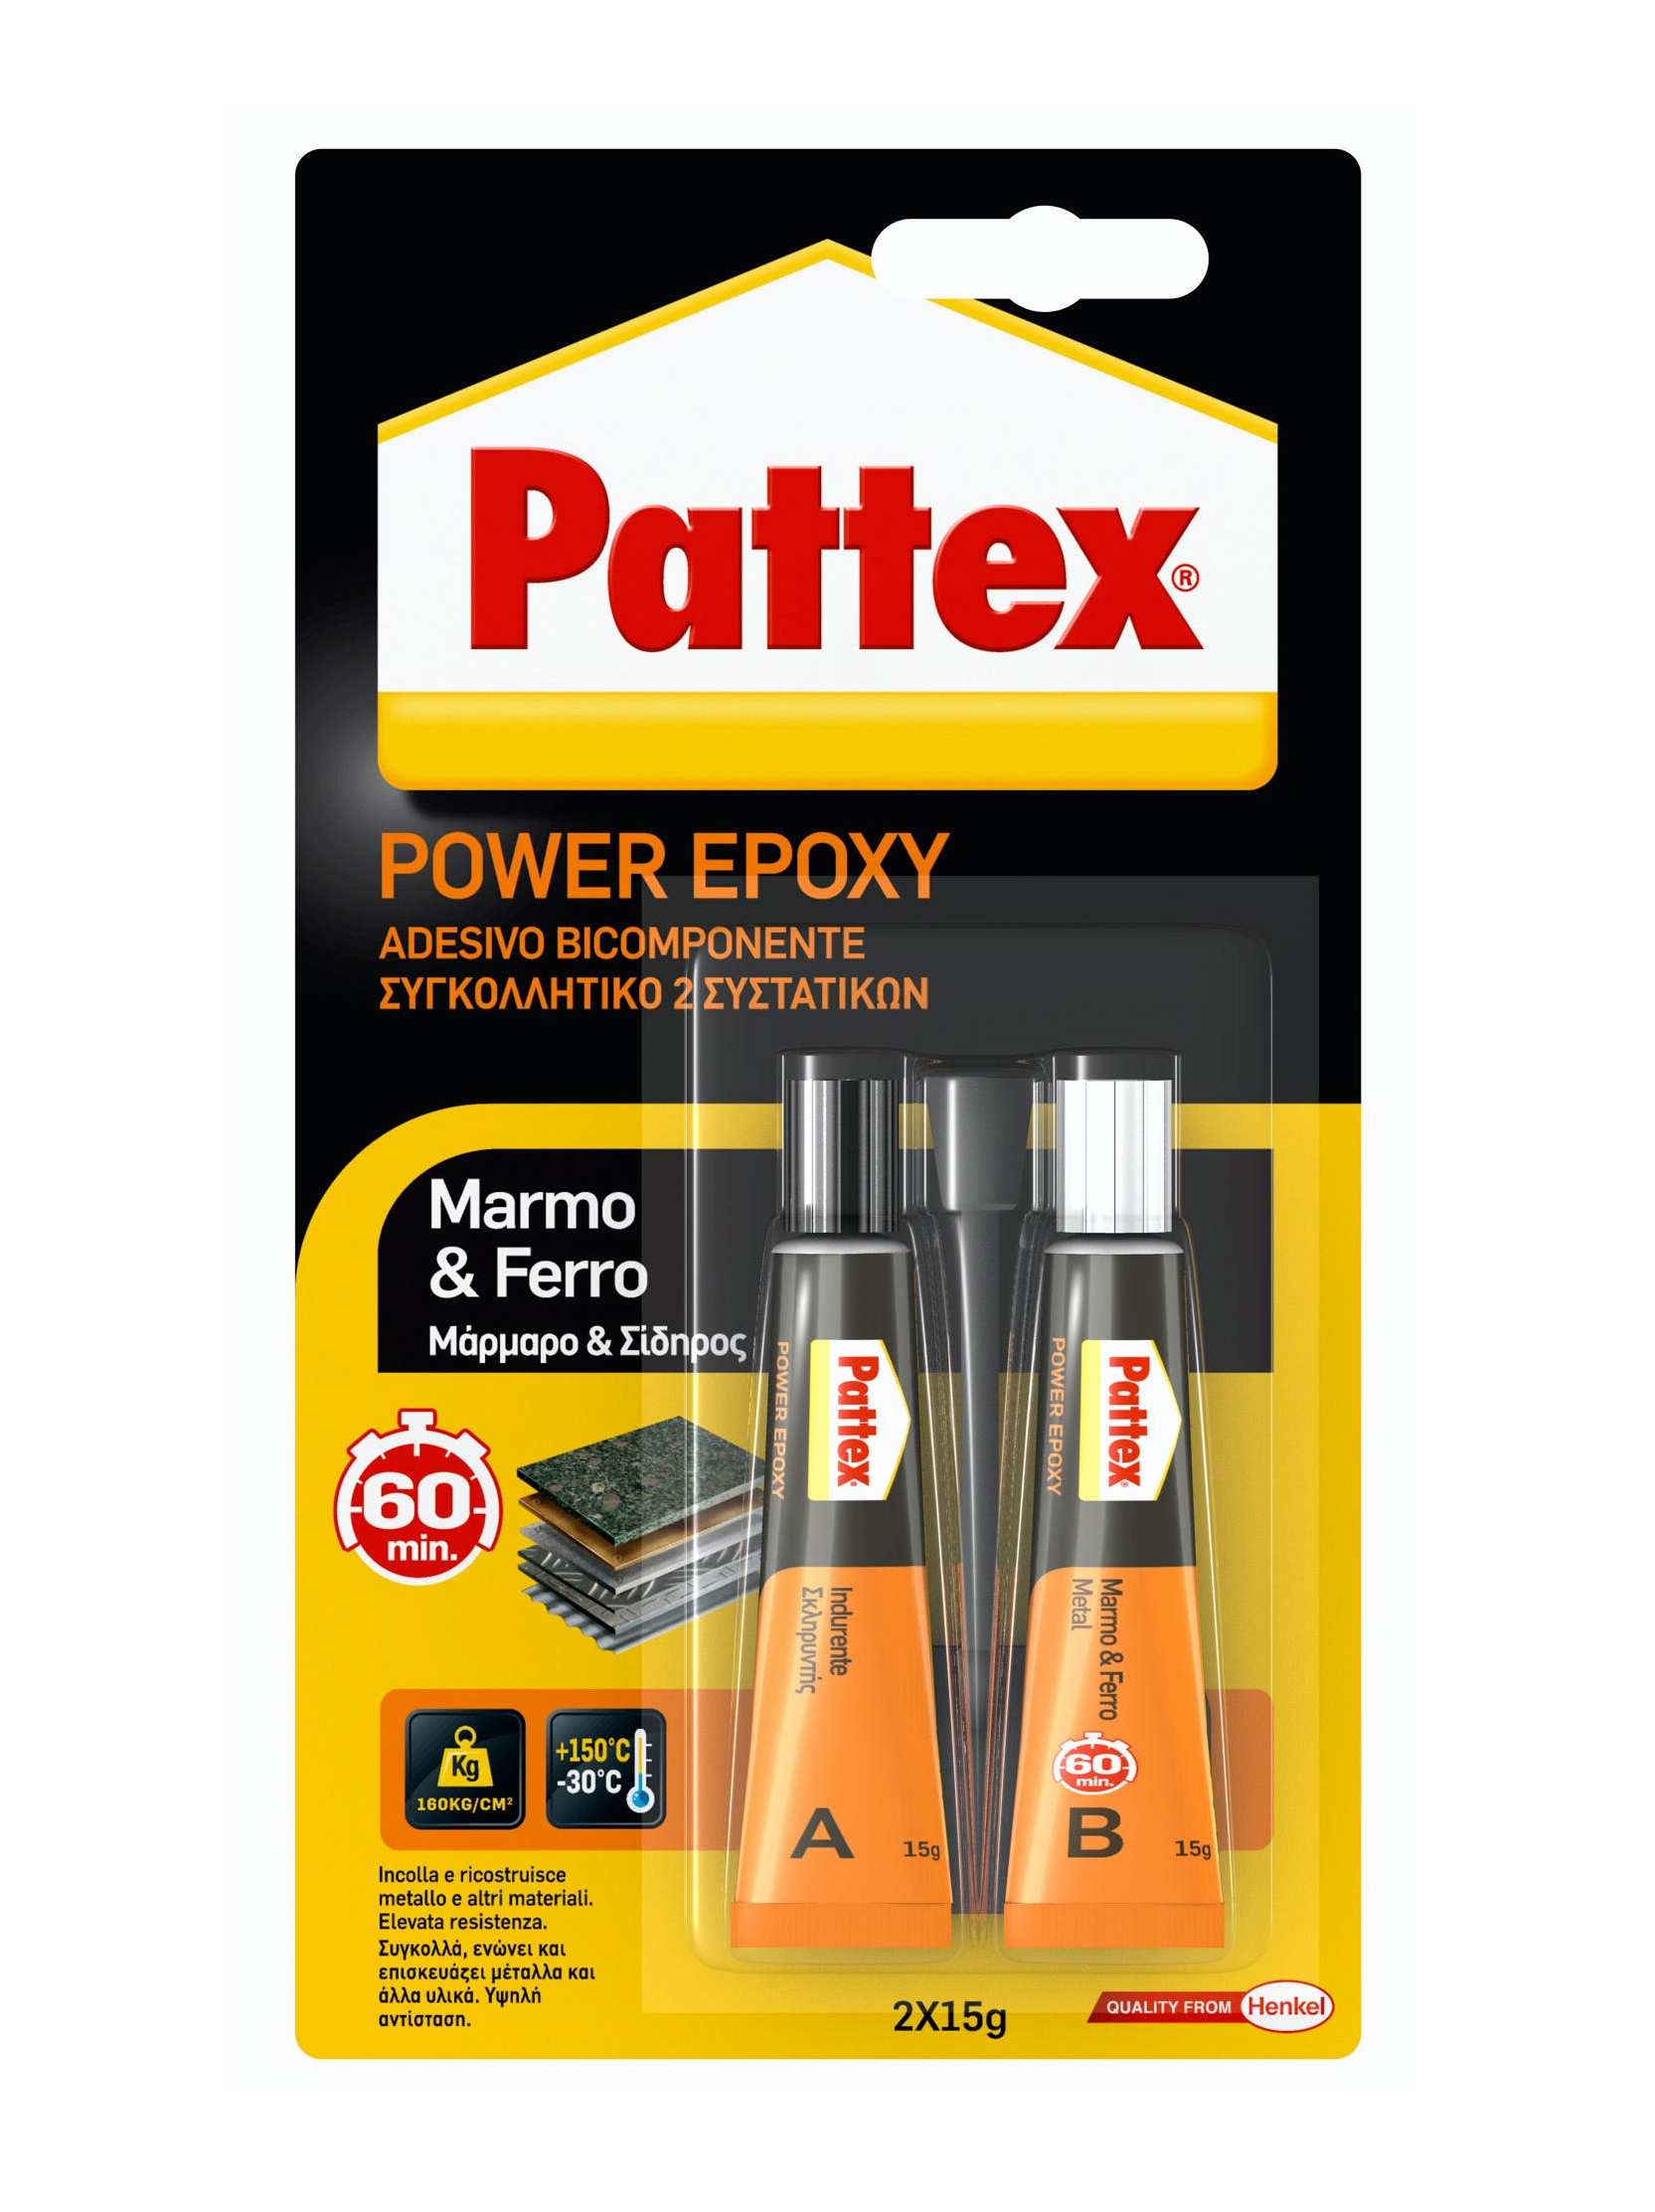 Pattex power epoxy marmo & ferro 30g